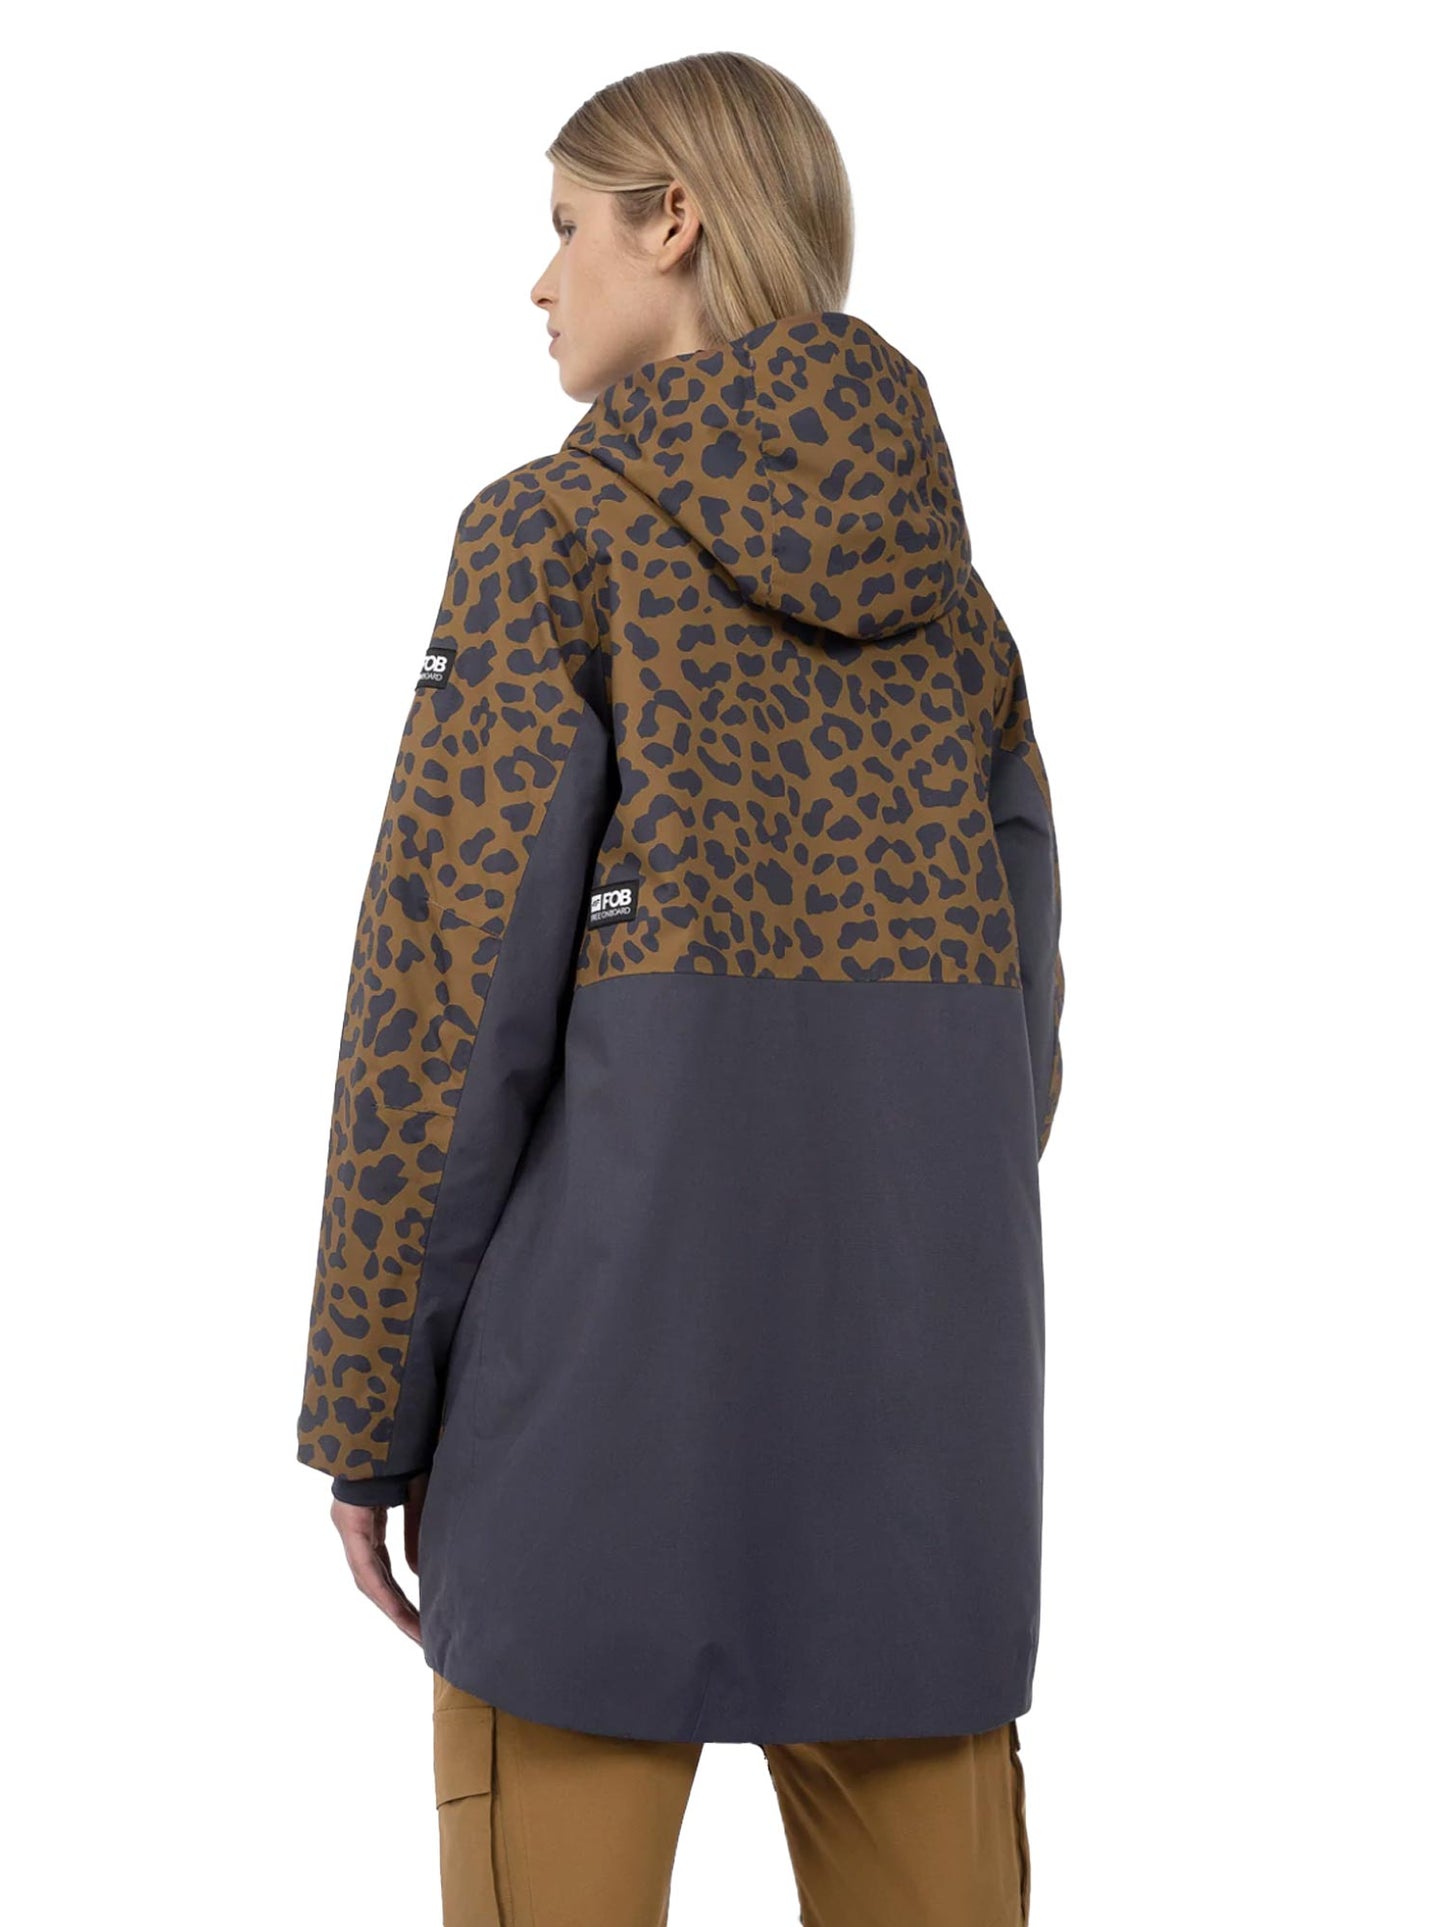 Snowboard Jacket Leopard Print